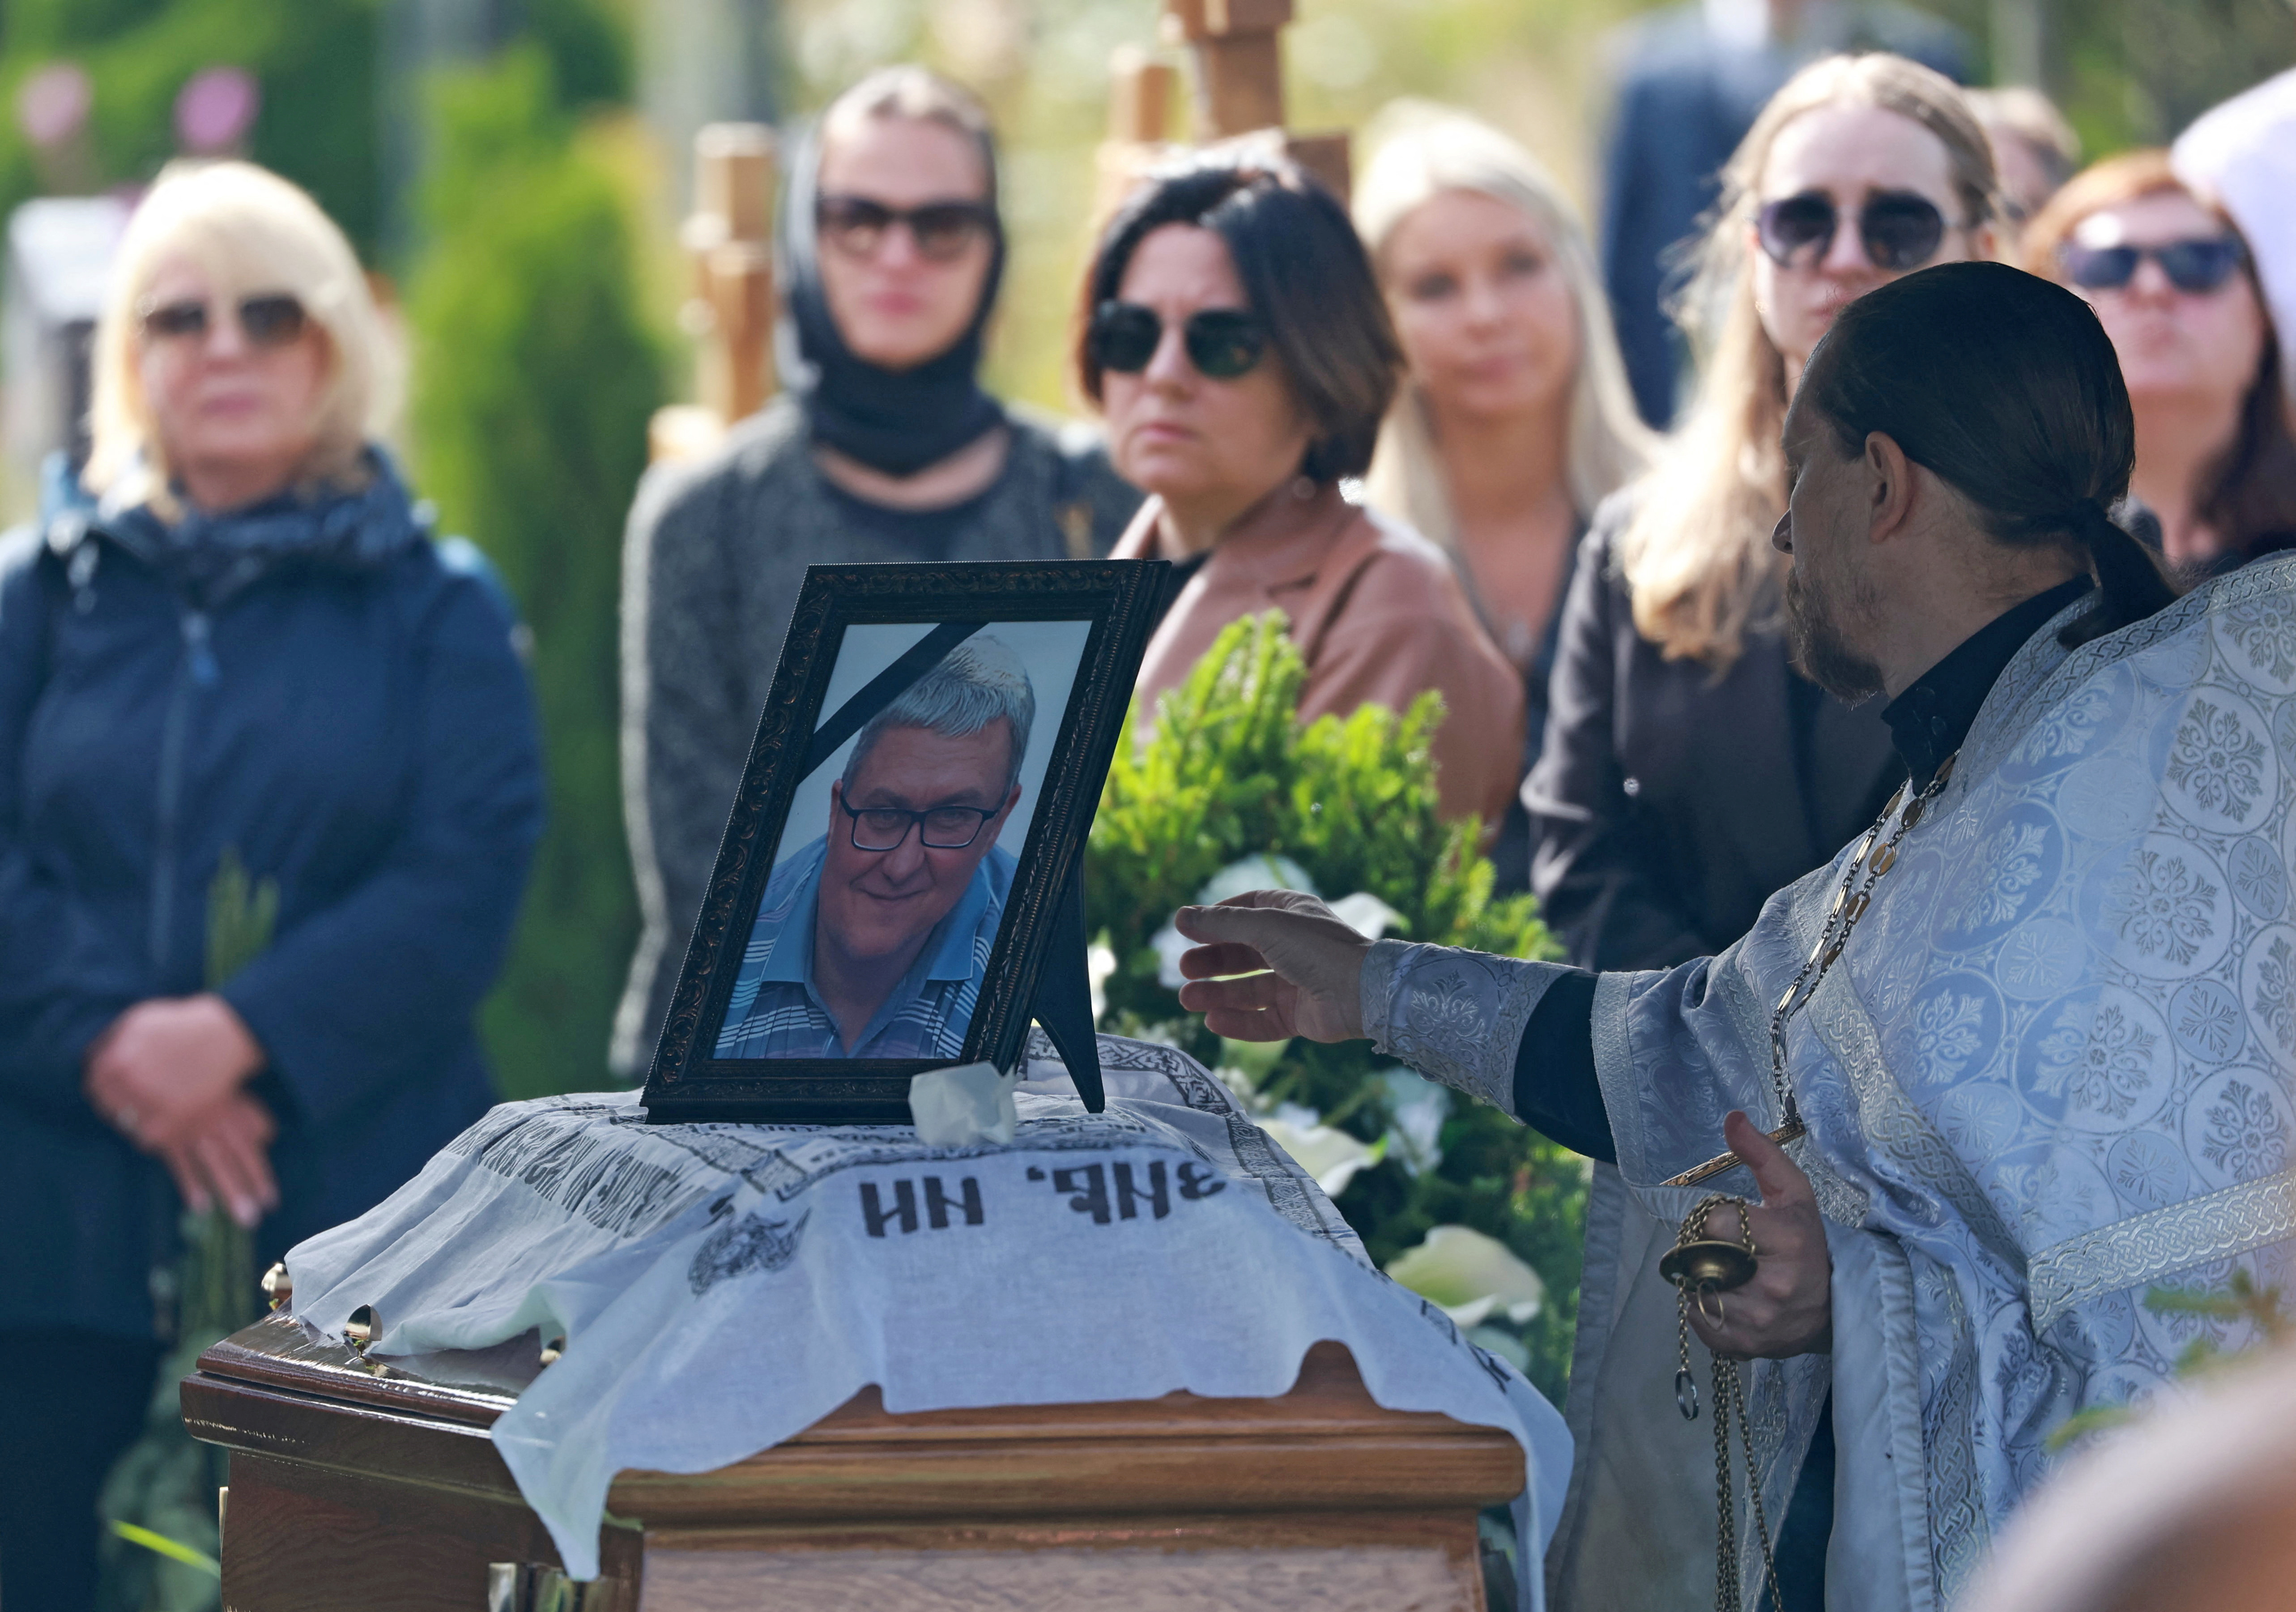 Funeral held for Prigozhin's logistics chief Chekalov in St. Petersburg